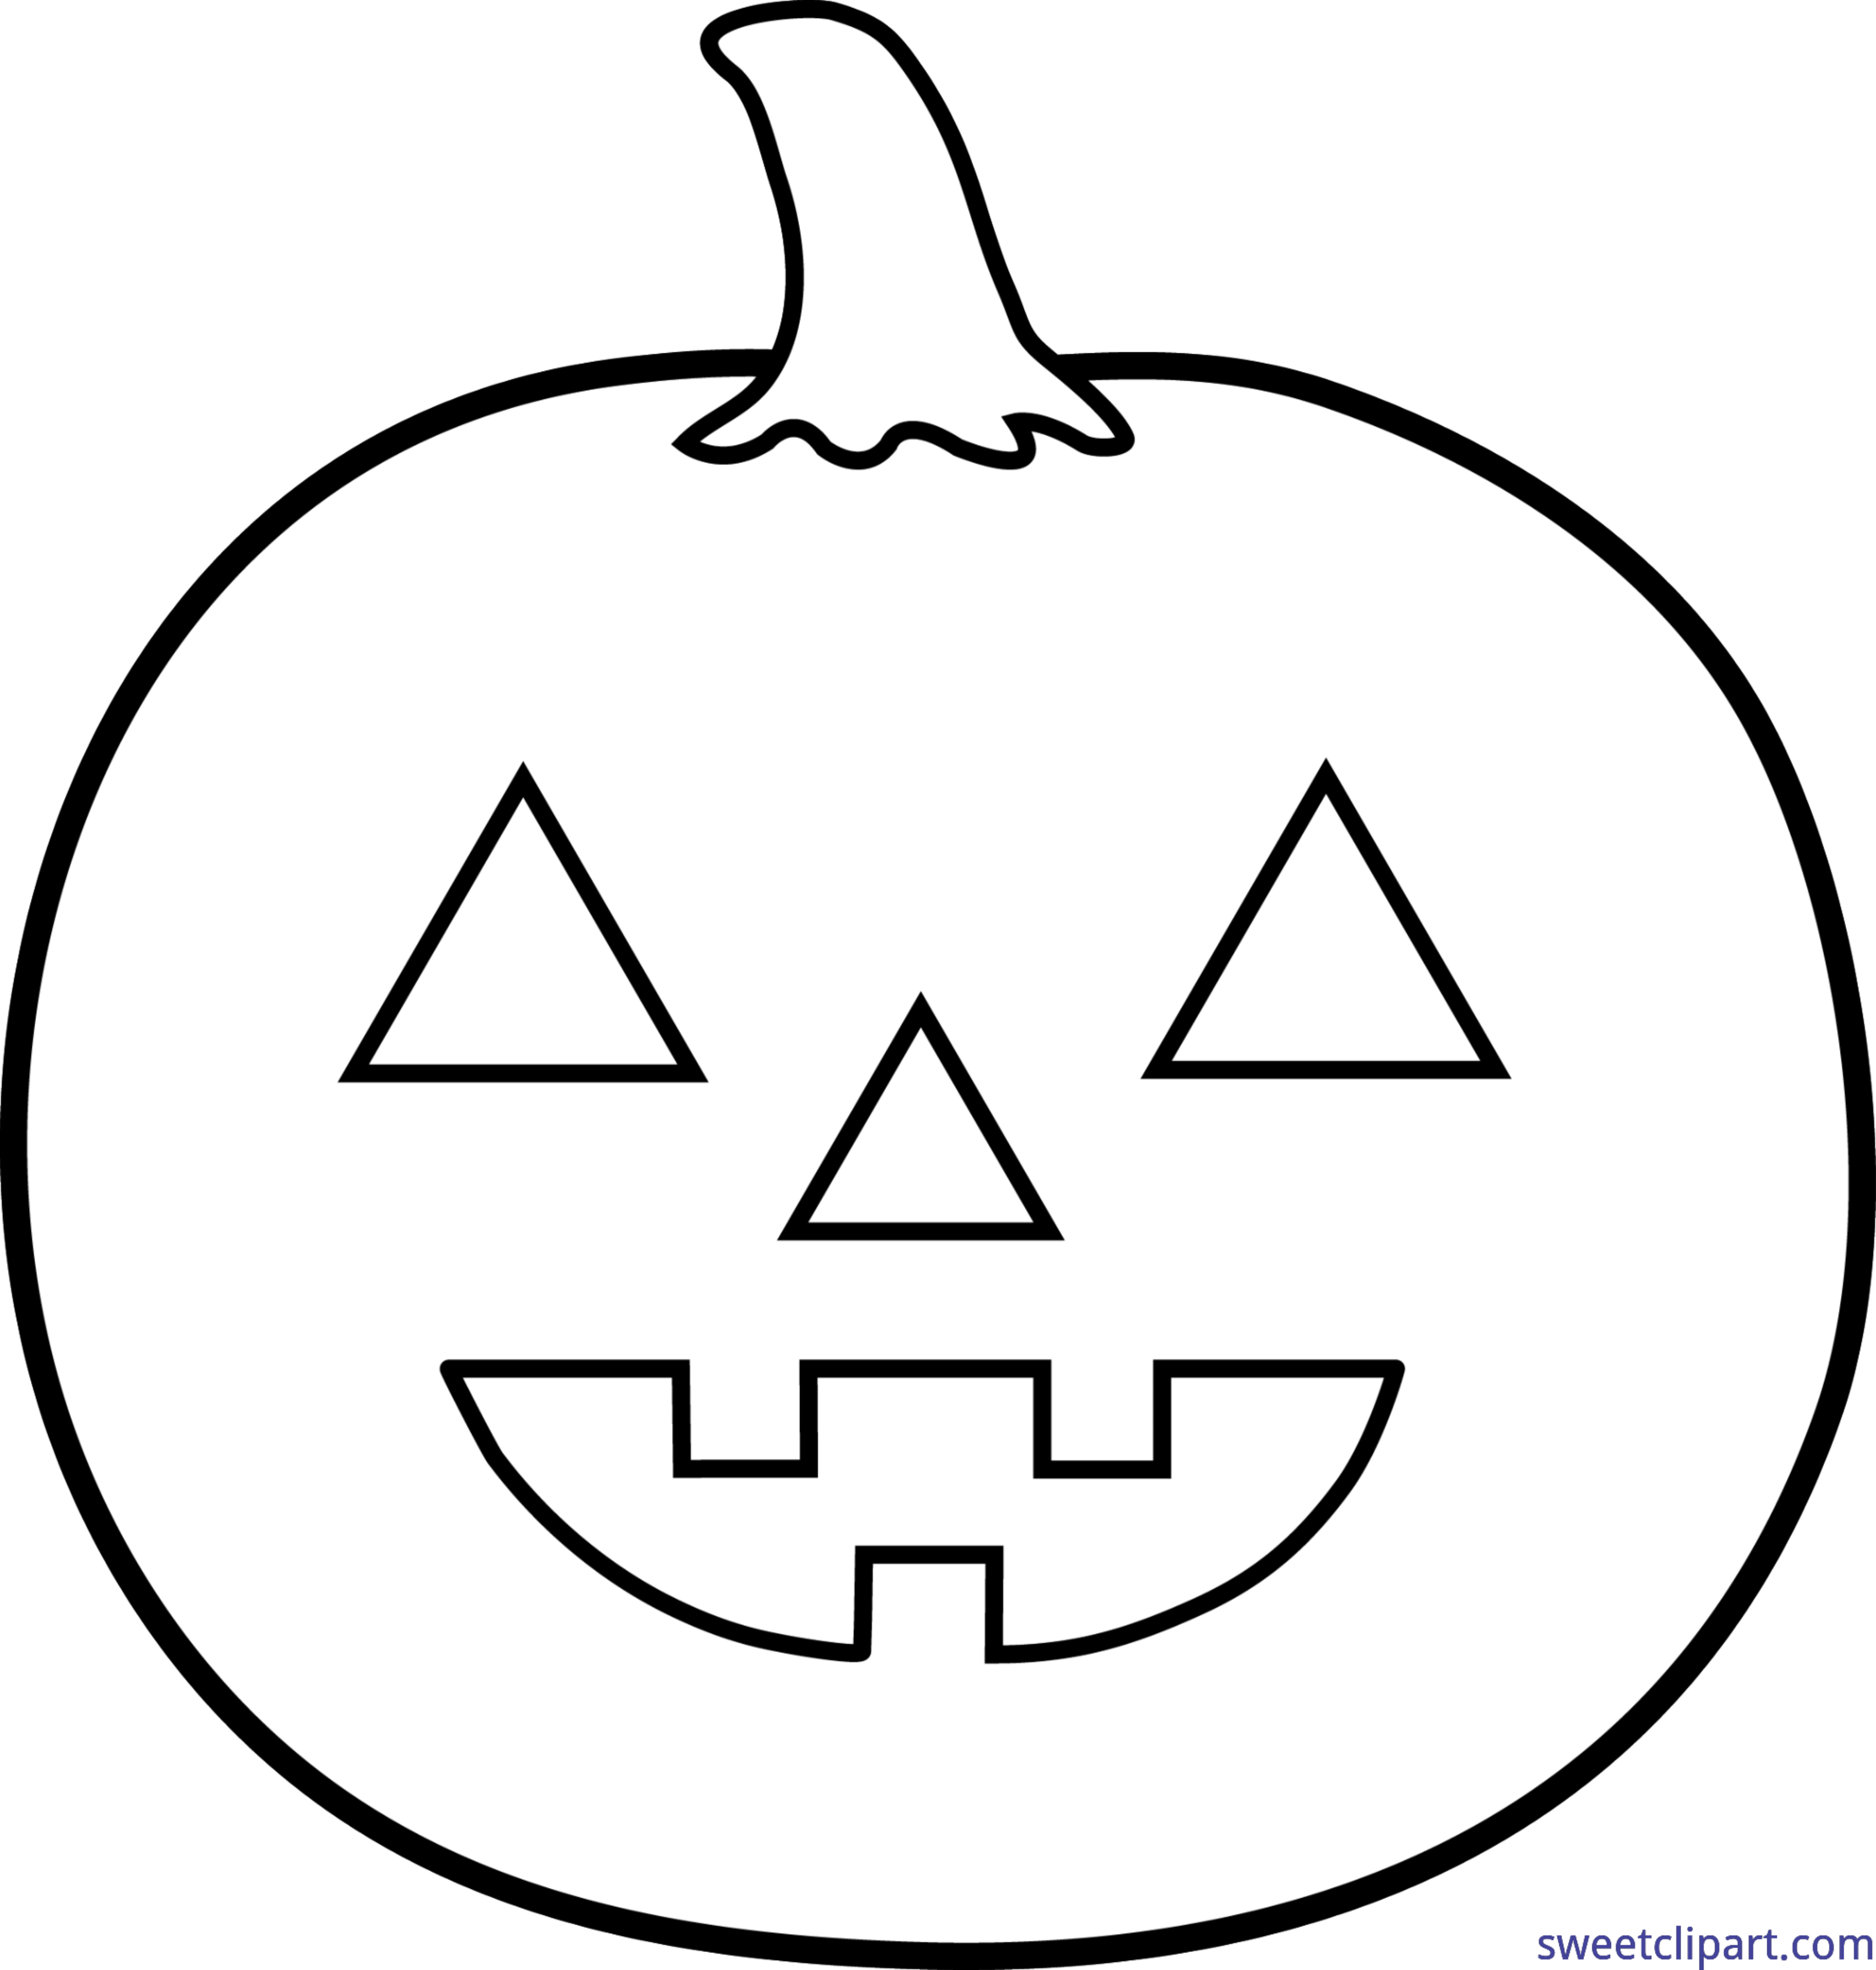 https://sweetclipart.com/wp-content/uploads/Halloween-Jack-O-Lantern-Coloring-Lineart-Clip-Art.png